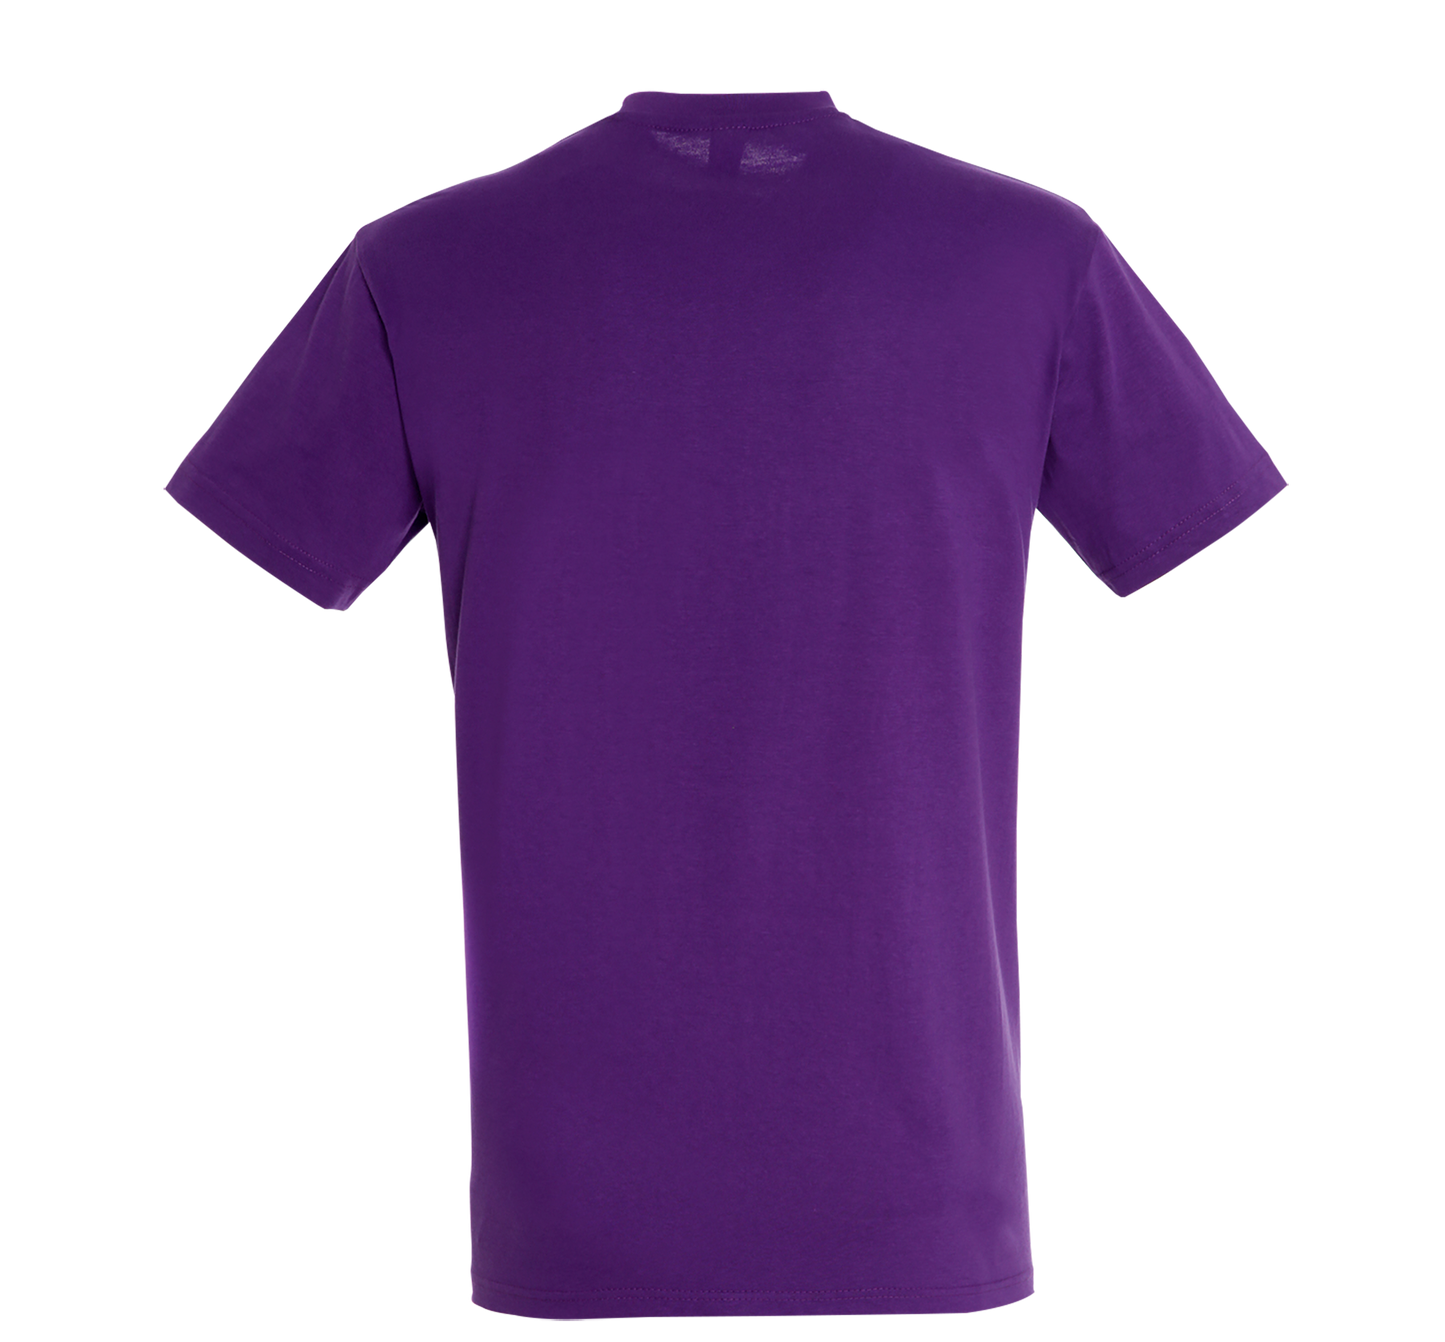 Tshirt Dark purple